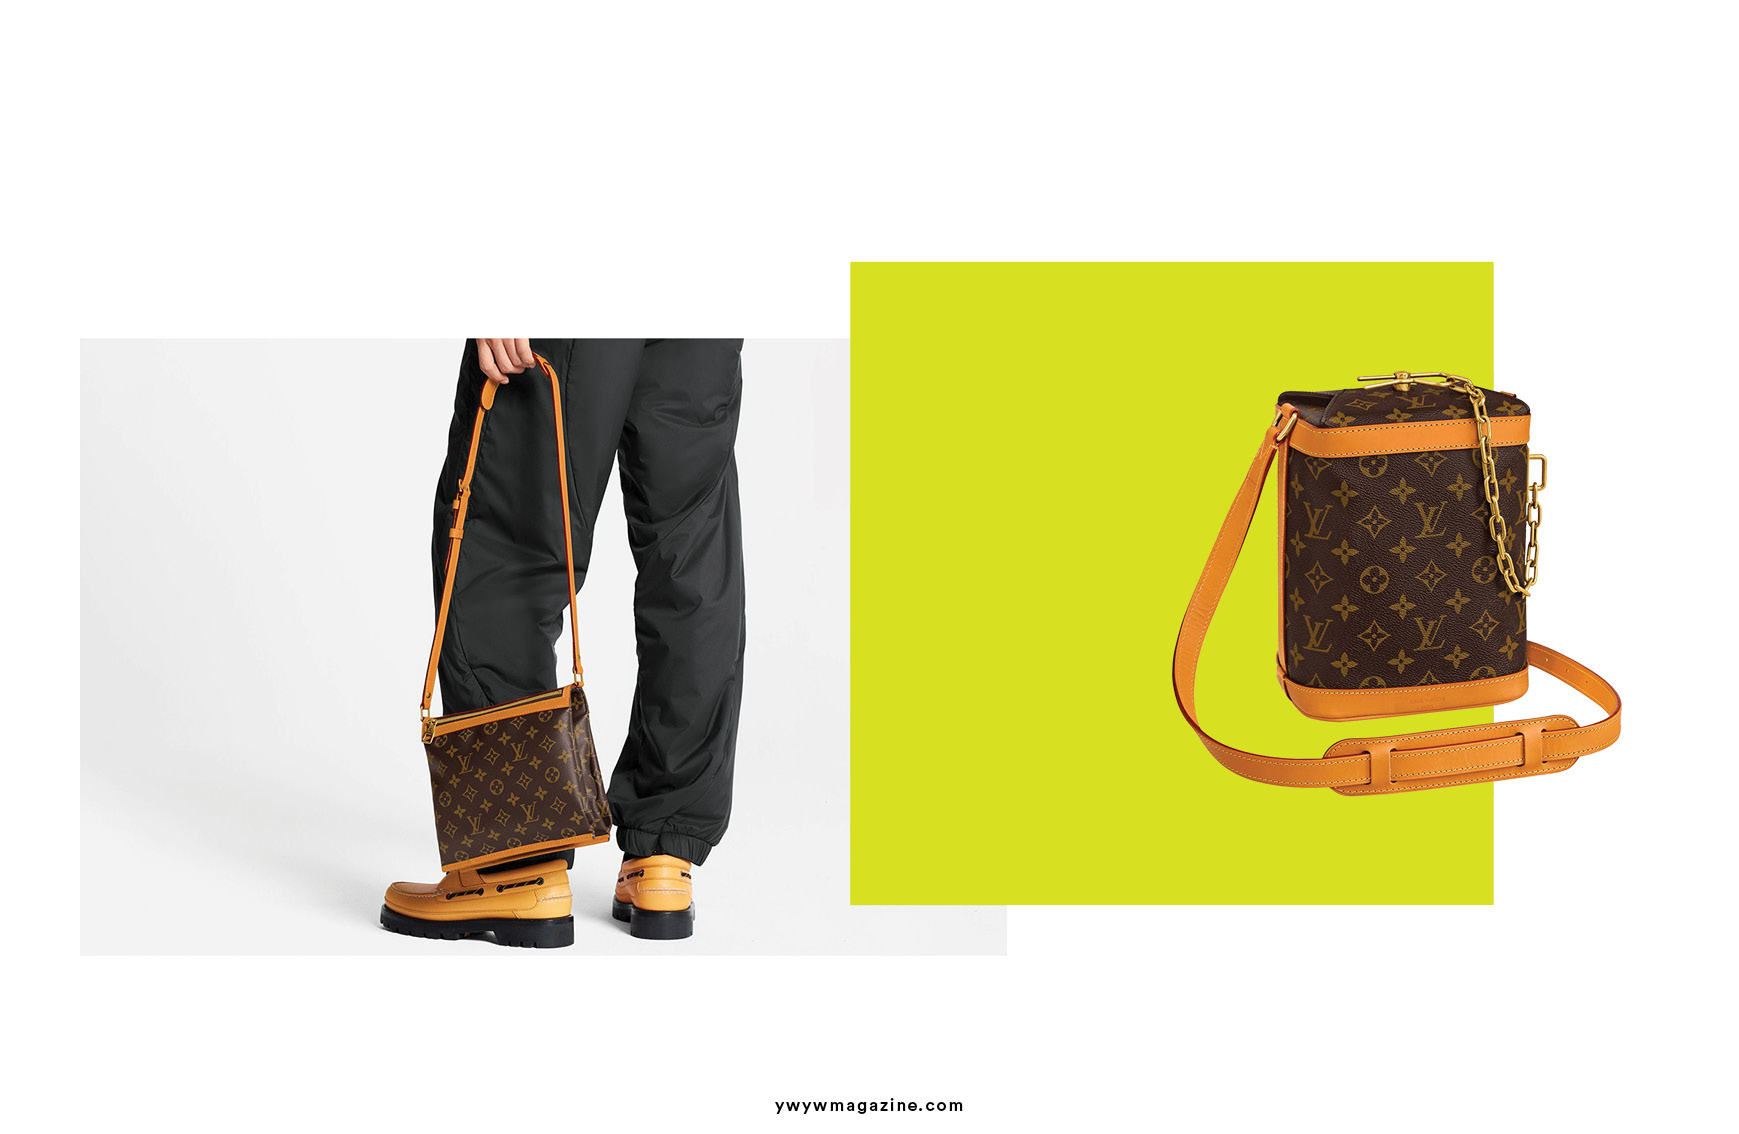 Louis Vuitton reinvents historic bags designs – YWYWMAGAZINE